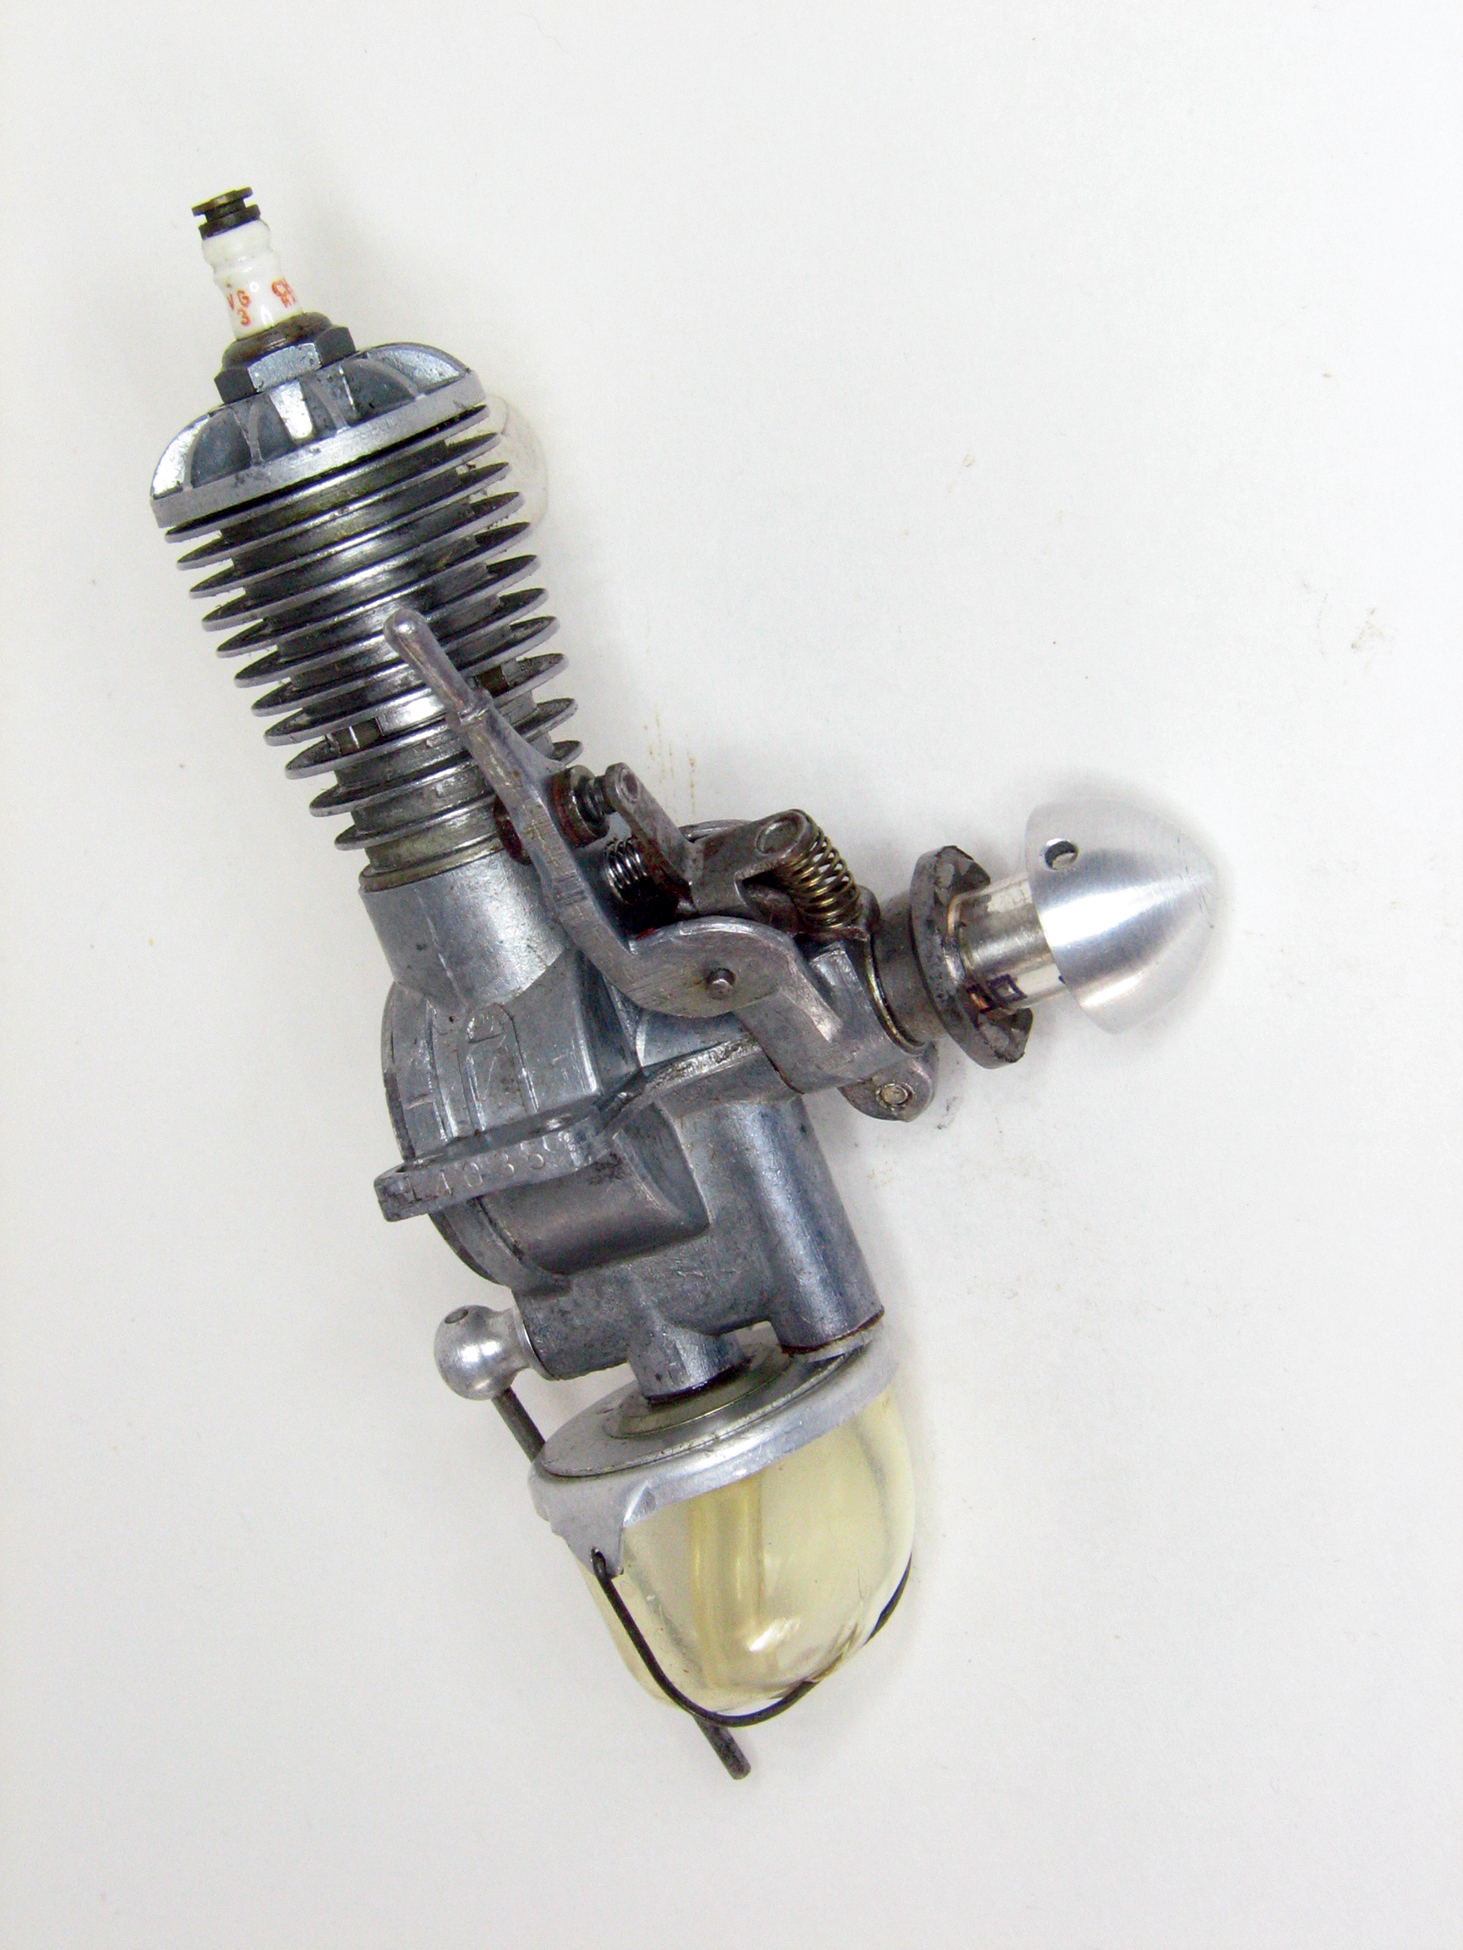  Ray Arden’s exquisite 1941 Super Atom .099 had a Champion spark plug.